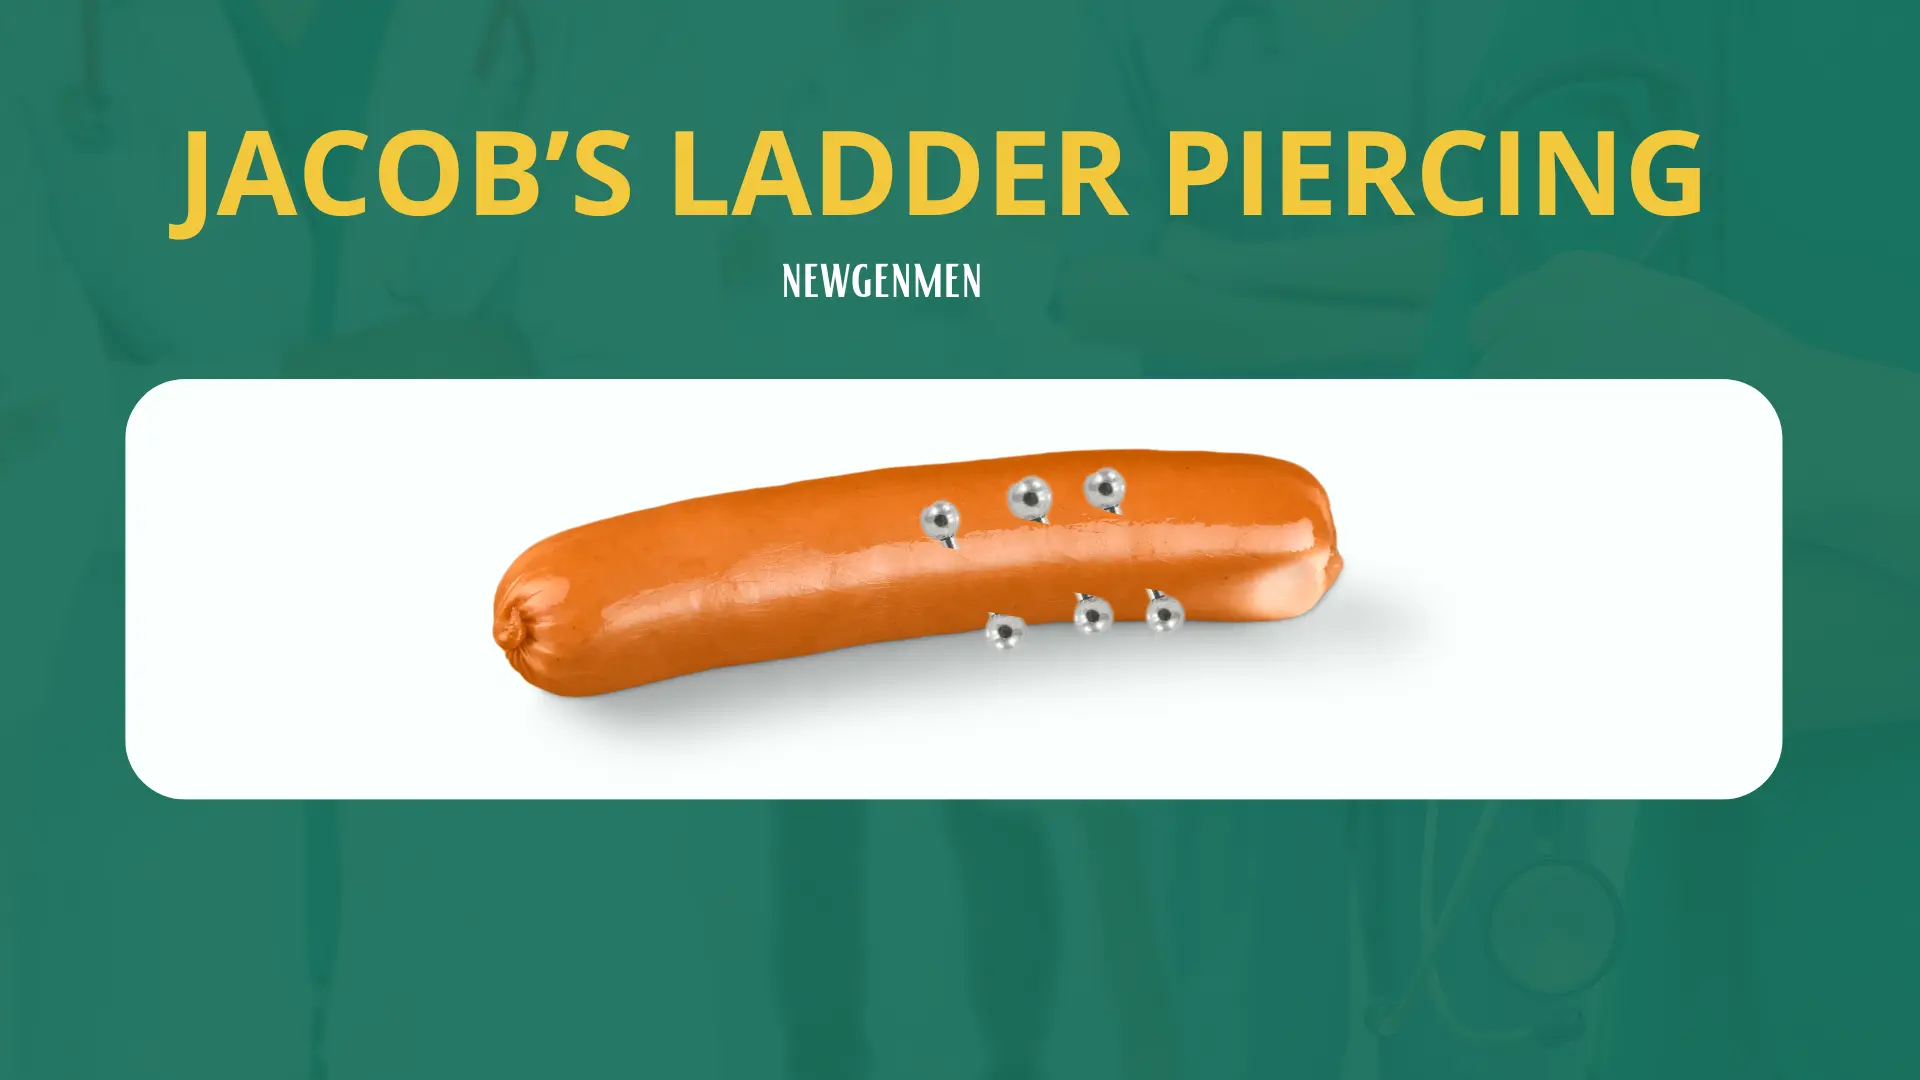 Jacob’s Ladder Piercing 101: Modifying Your Member